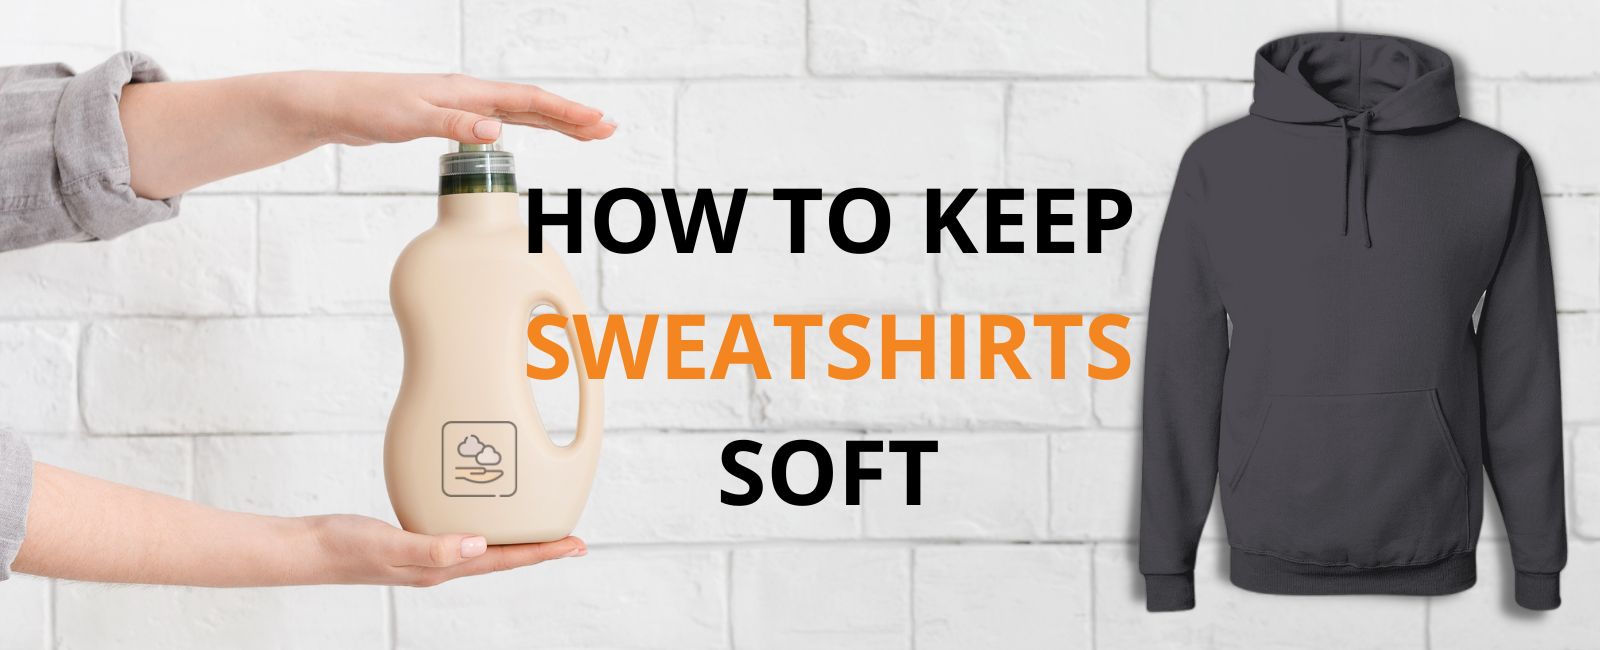 How to keep sweatshirts soft